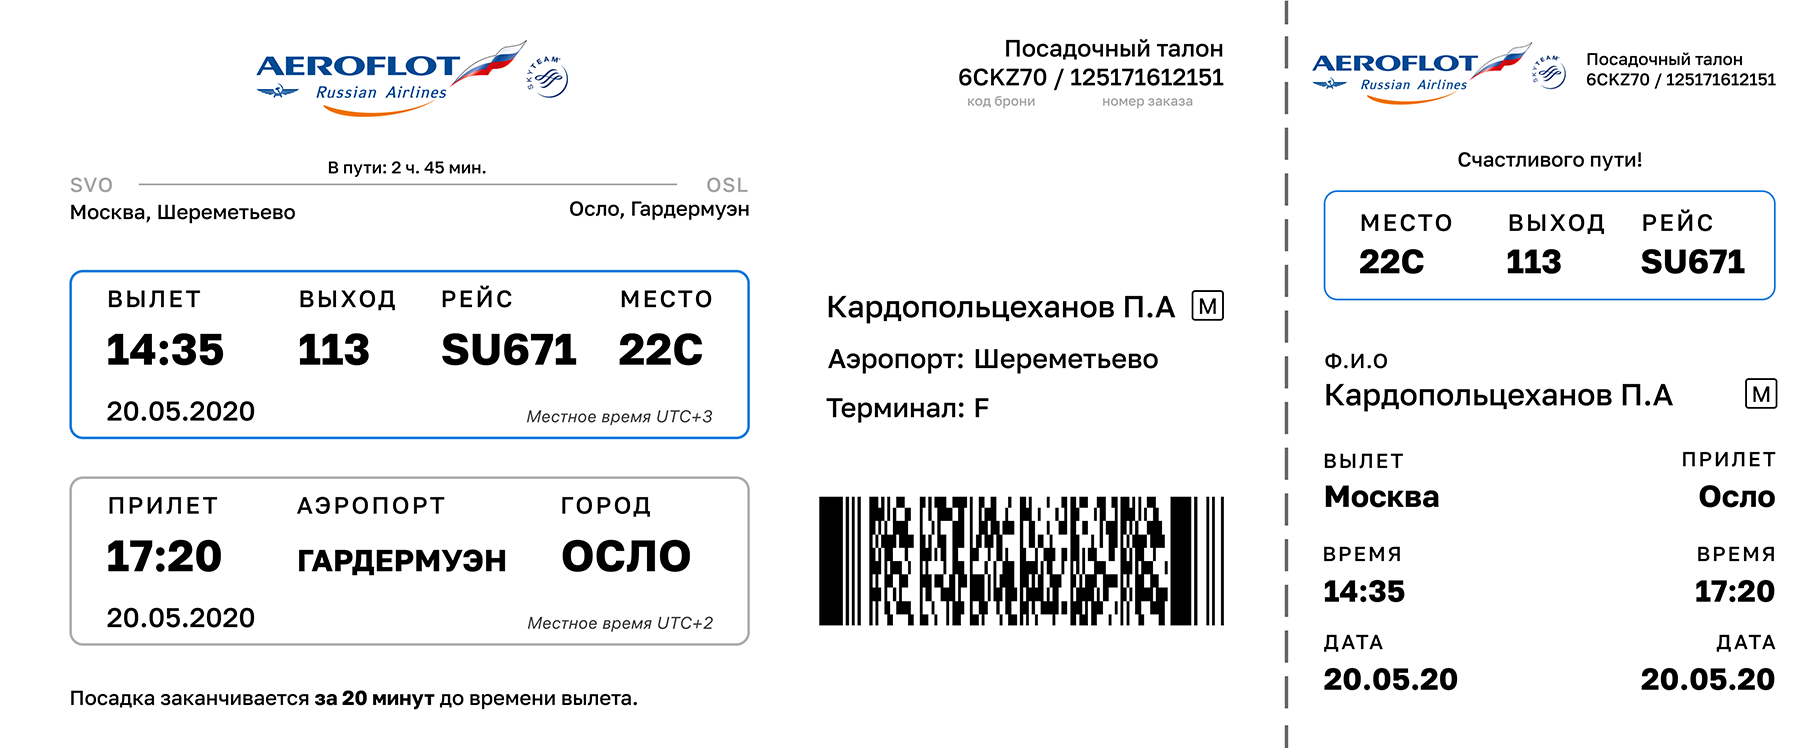 Билет по штрихкоду. Посадочный талон Аэрофлот Москва. Посадочный билет Аэрофлот. Посадочный талон Аэрофлот Шереметьево. Посадочный талон Аэрофлот пример.